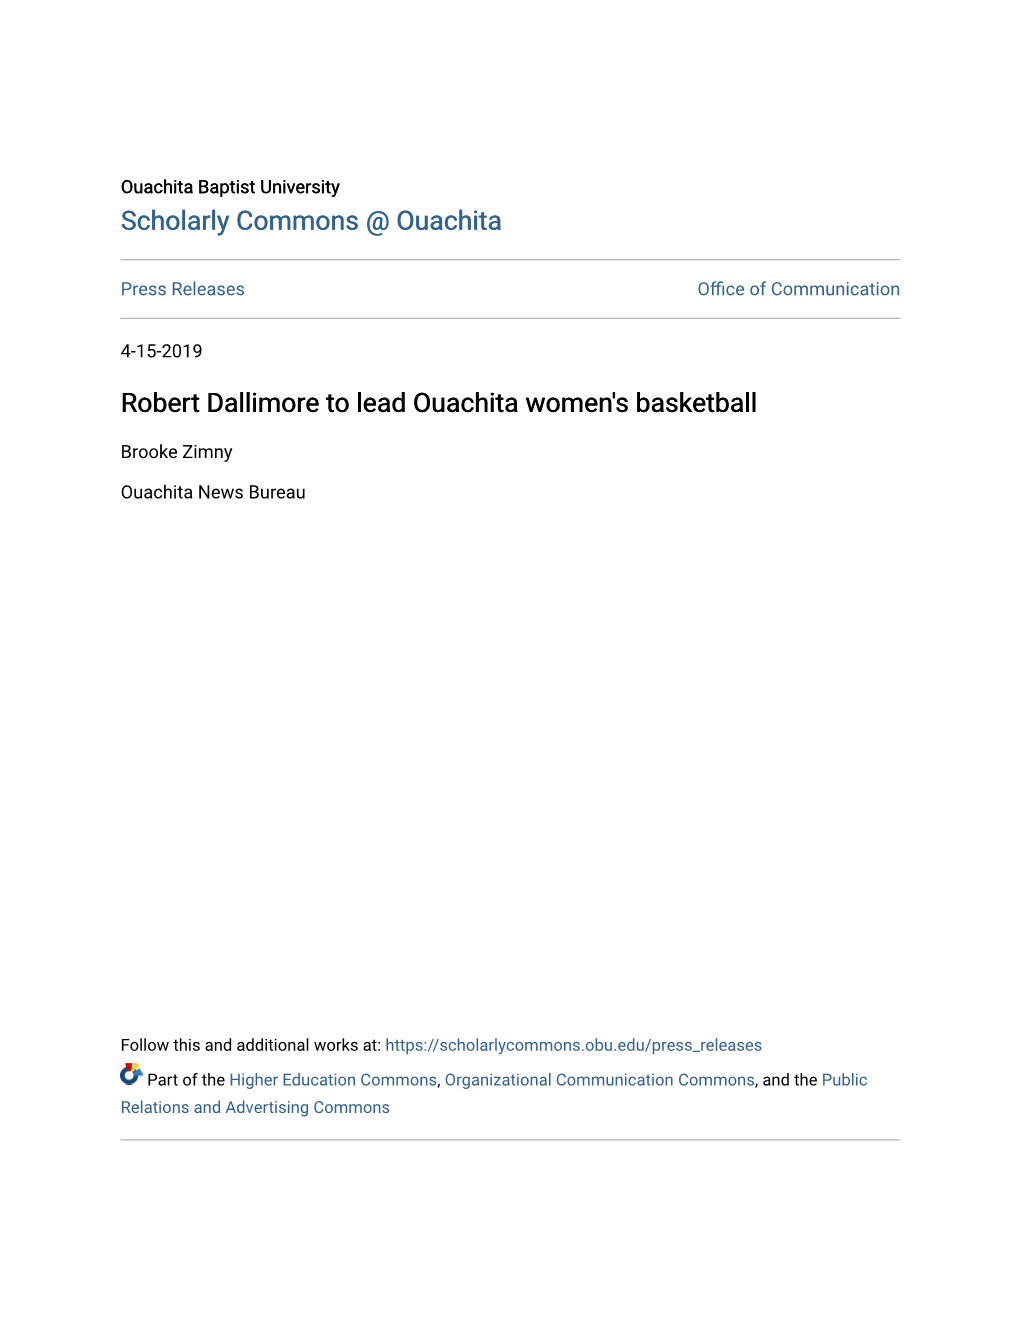 Robert Dallimore to Lead Ouachita Women's Basketball